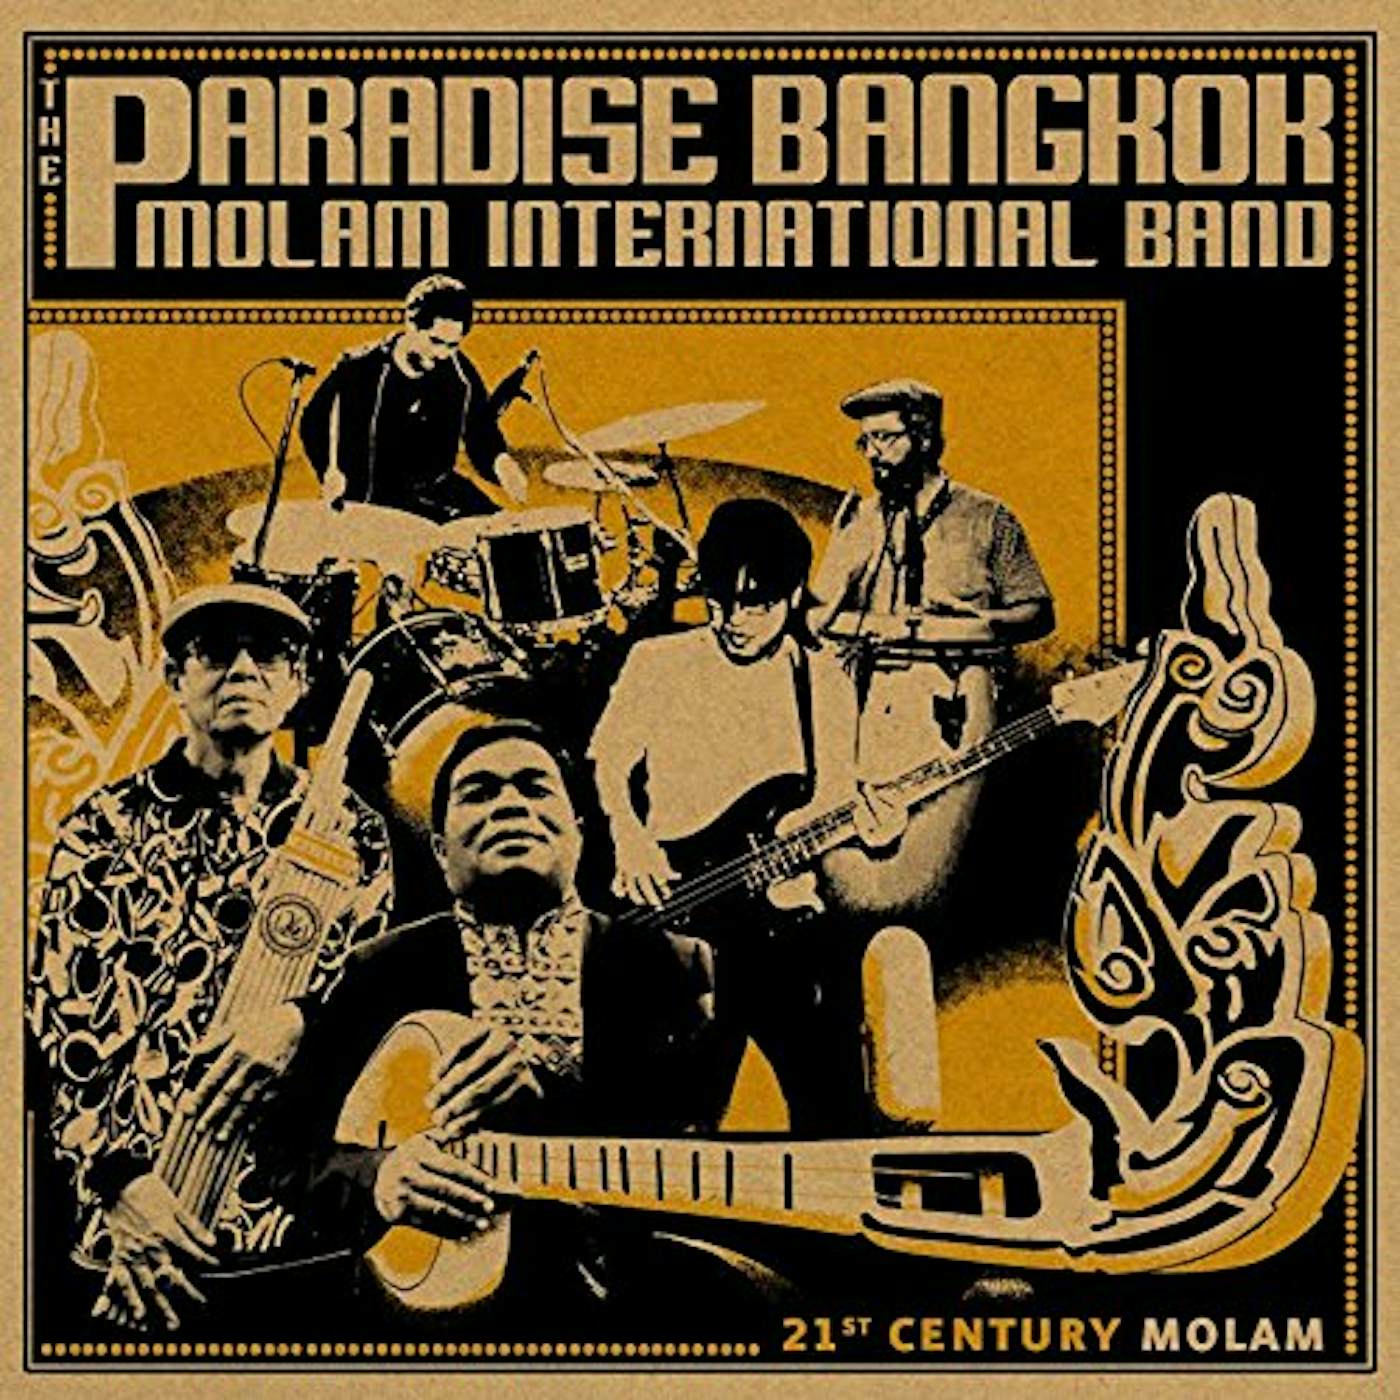 The Paradise Bangkok Molam International Band 21st Century Molam Vinyl Record